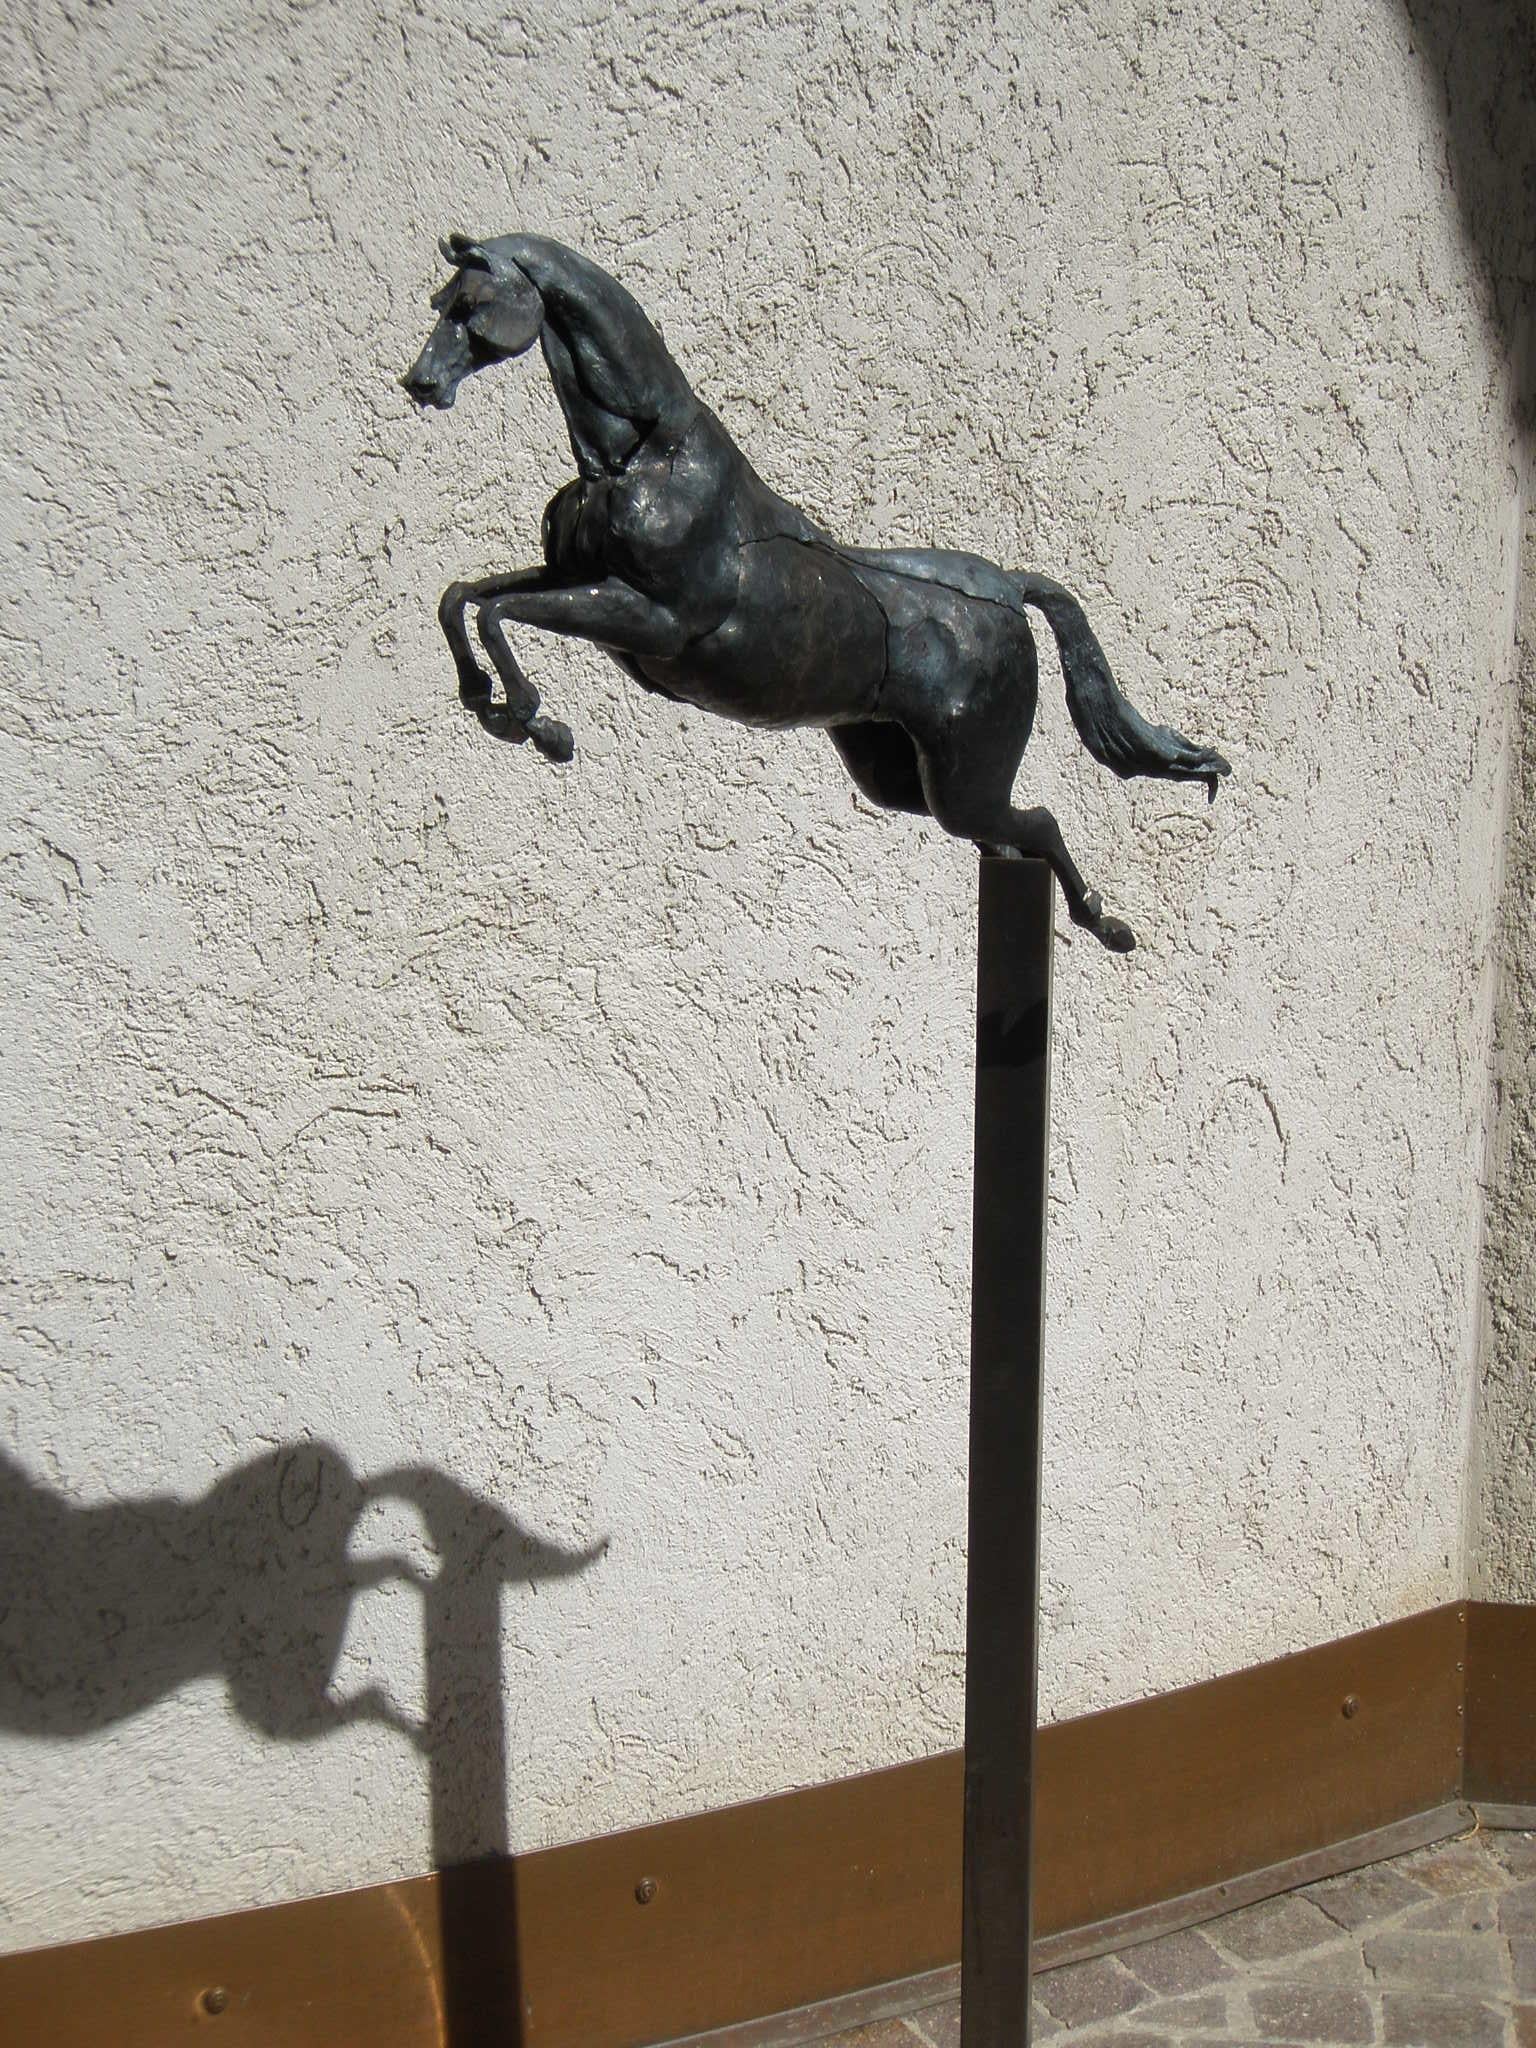 Ivan Zanoni Figurative Sculpture - Jumping horse, black wrought iron animal sculpture by Italian blacksmith Zanoni